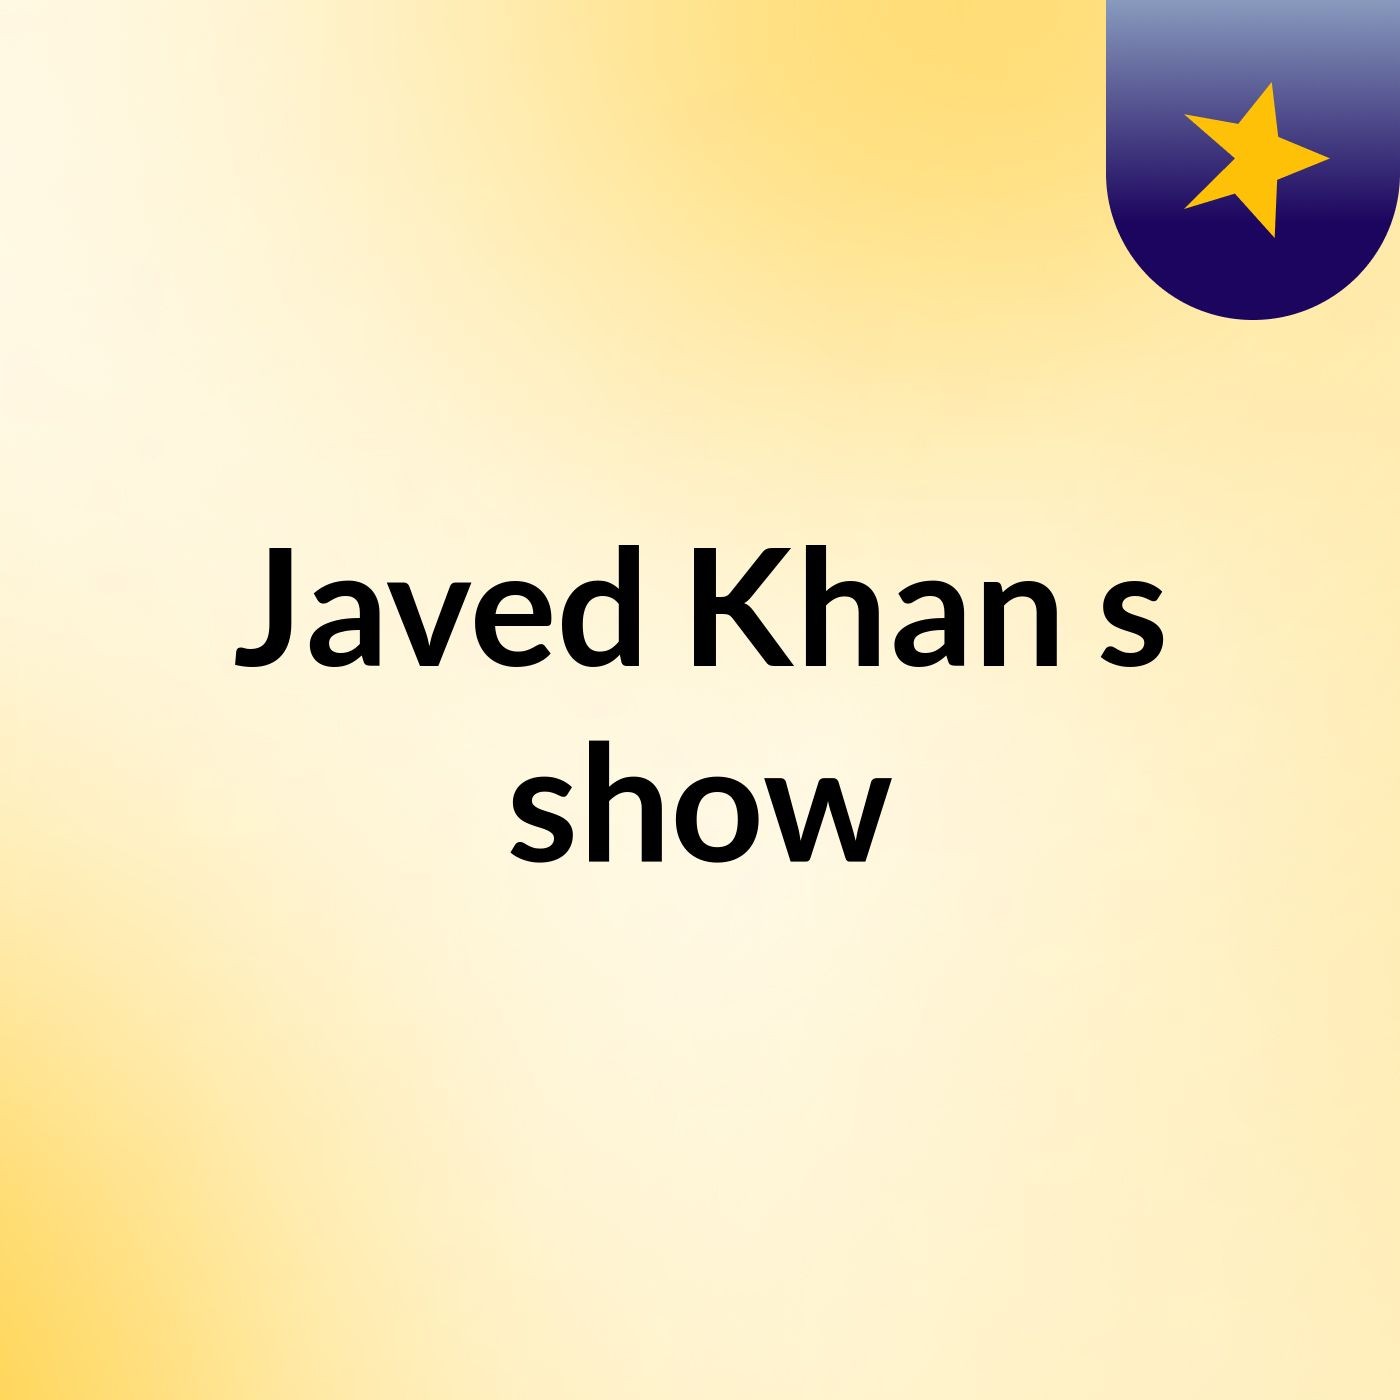 Javed Khan's show